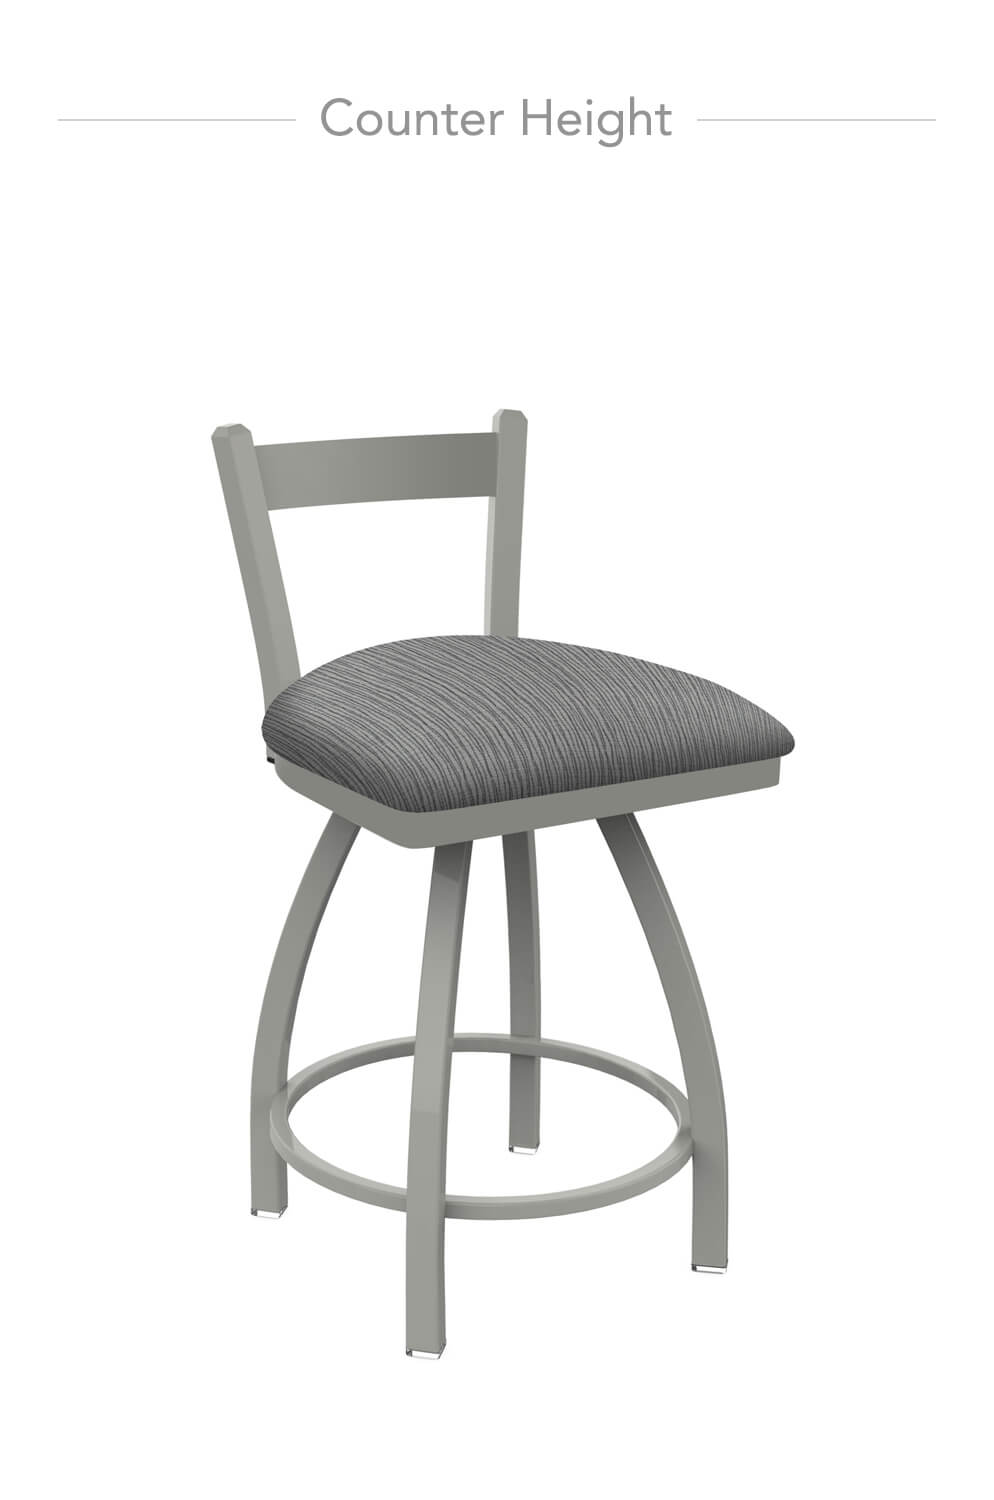 https://barstoolcomforts.com/wp-content/uploads/2019/03/catalina-821-swivel-stool-in-counter-height.jpg